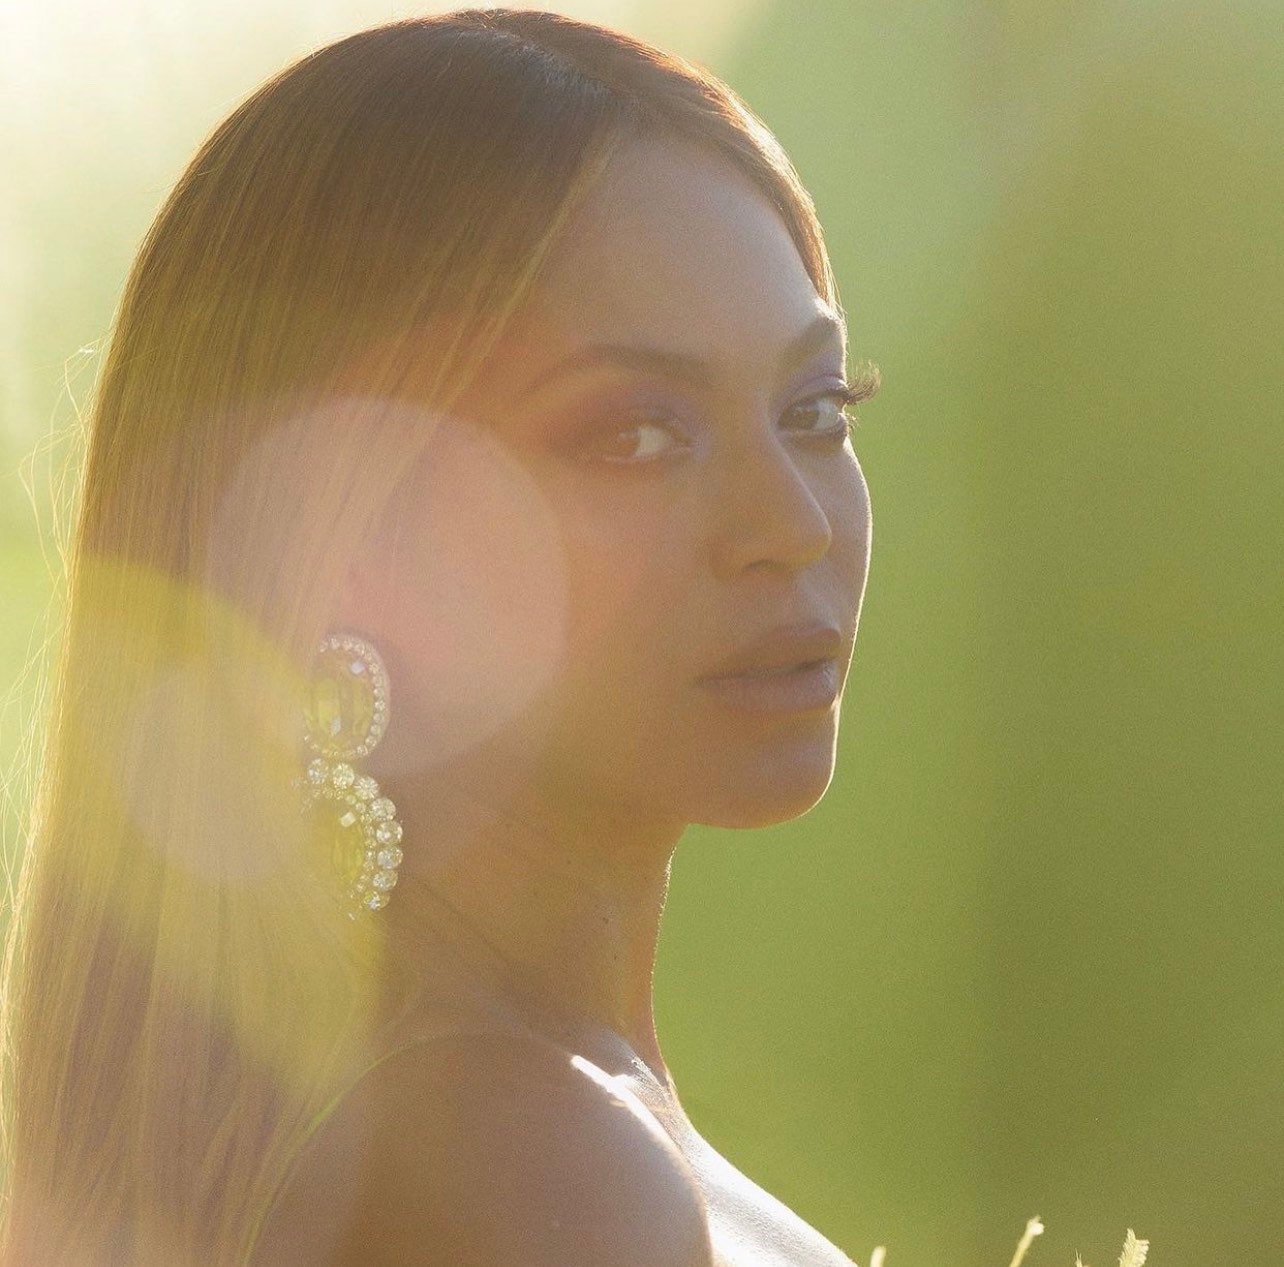 Beyonce Oscars Earrings / Crystal Earrings / clip on / drag queen